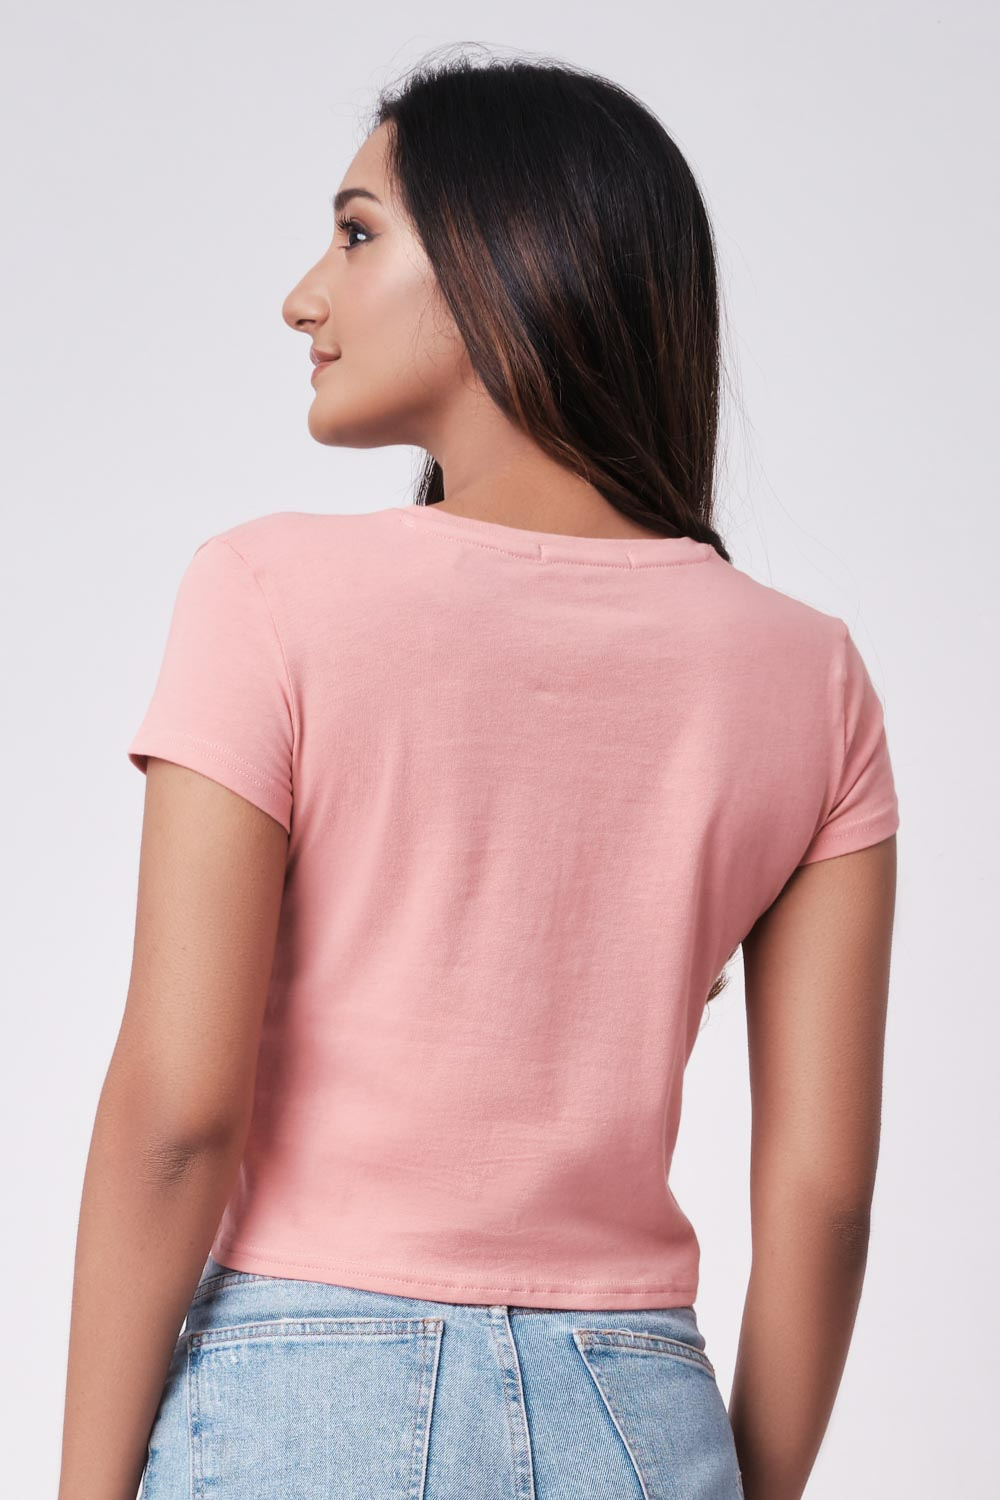 Odel Basics Light Pink Short Sleeve Tshirt Dress